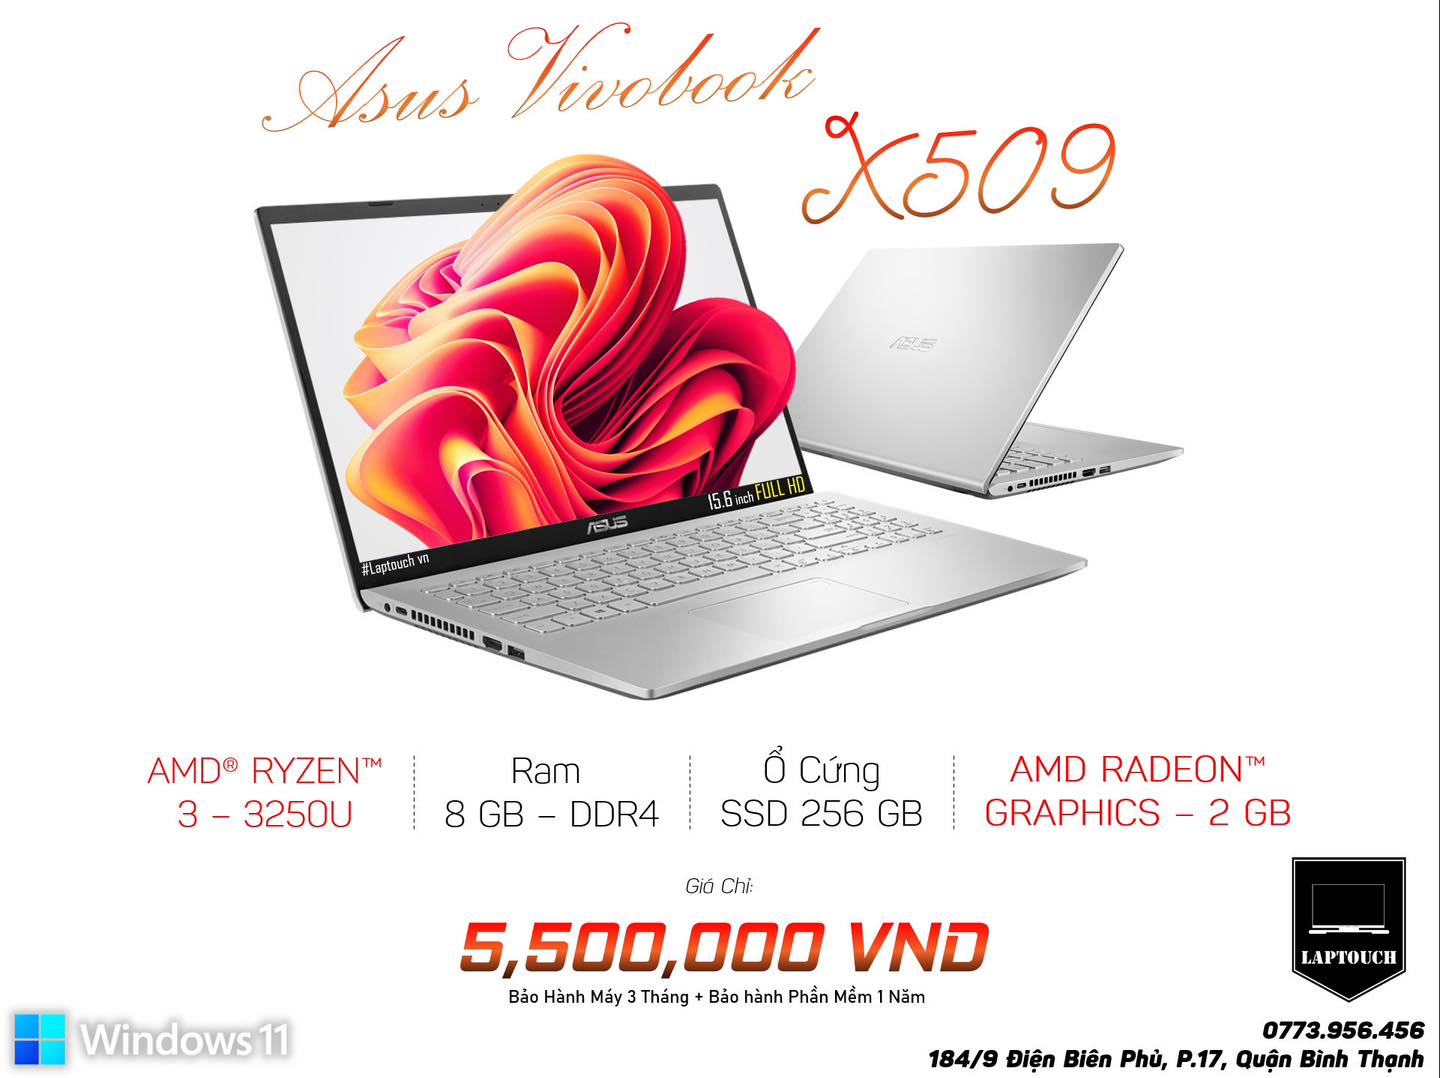 Asus Vivobook X509